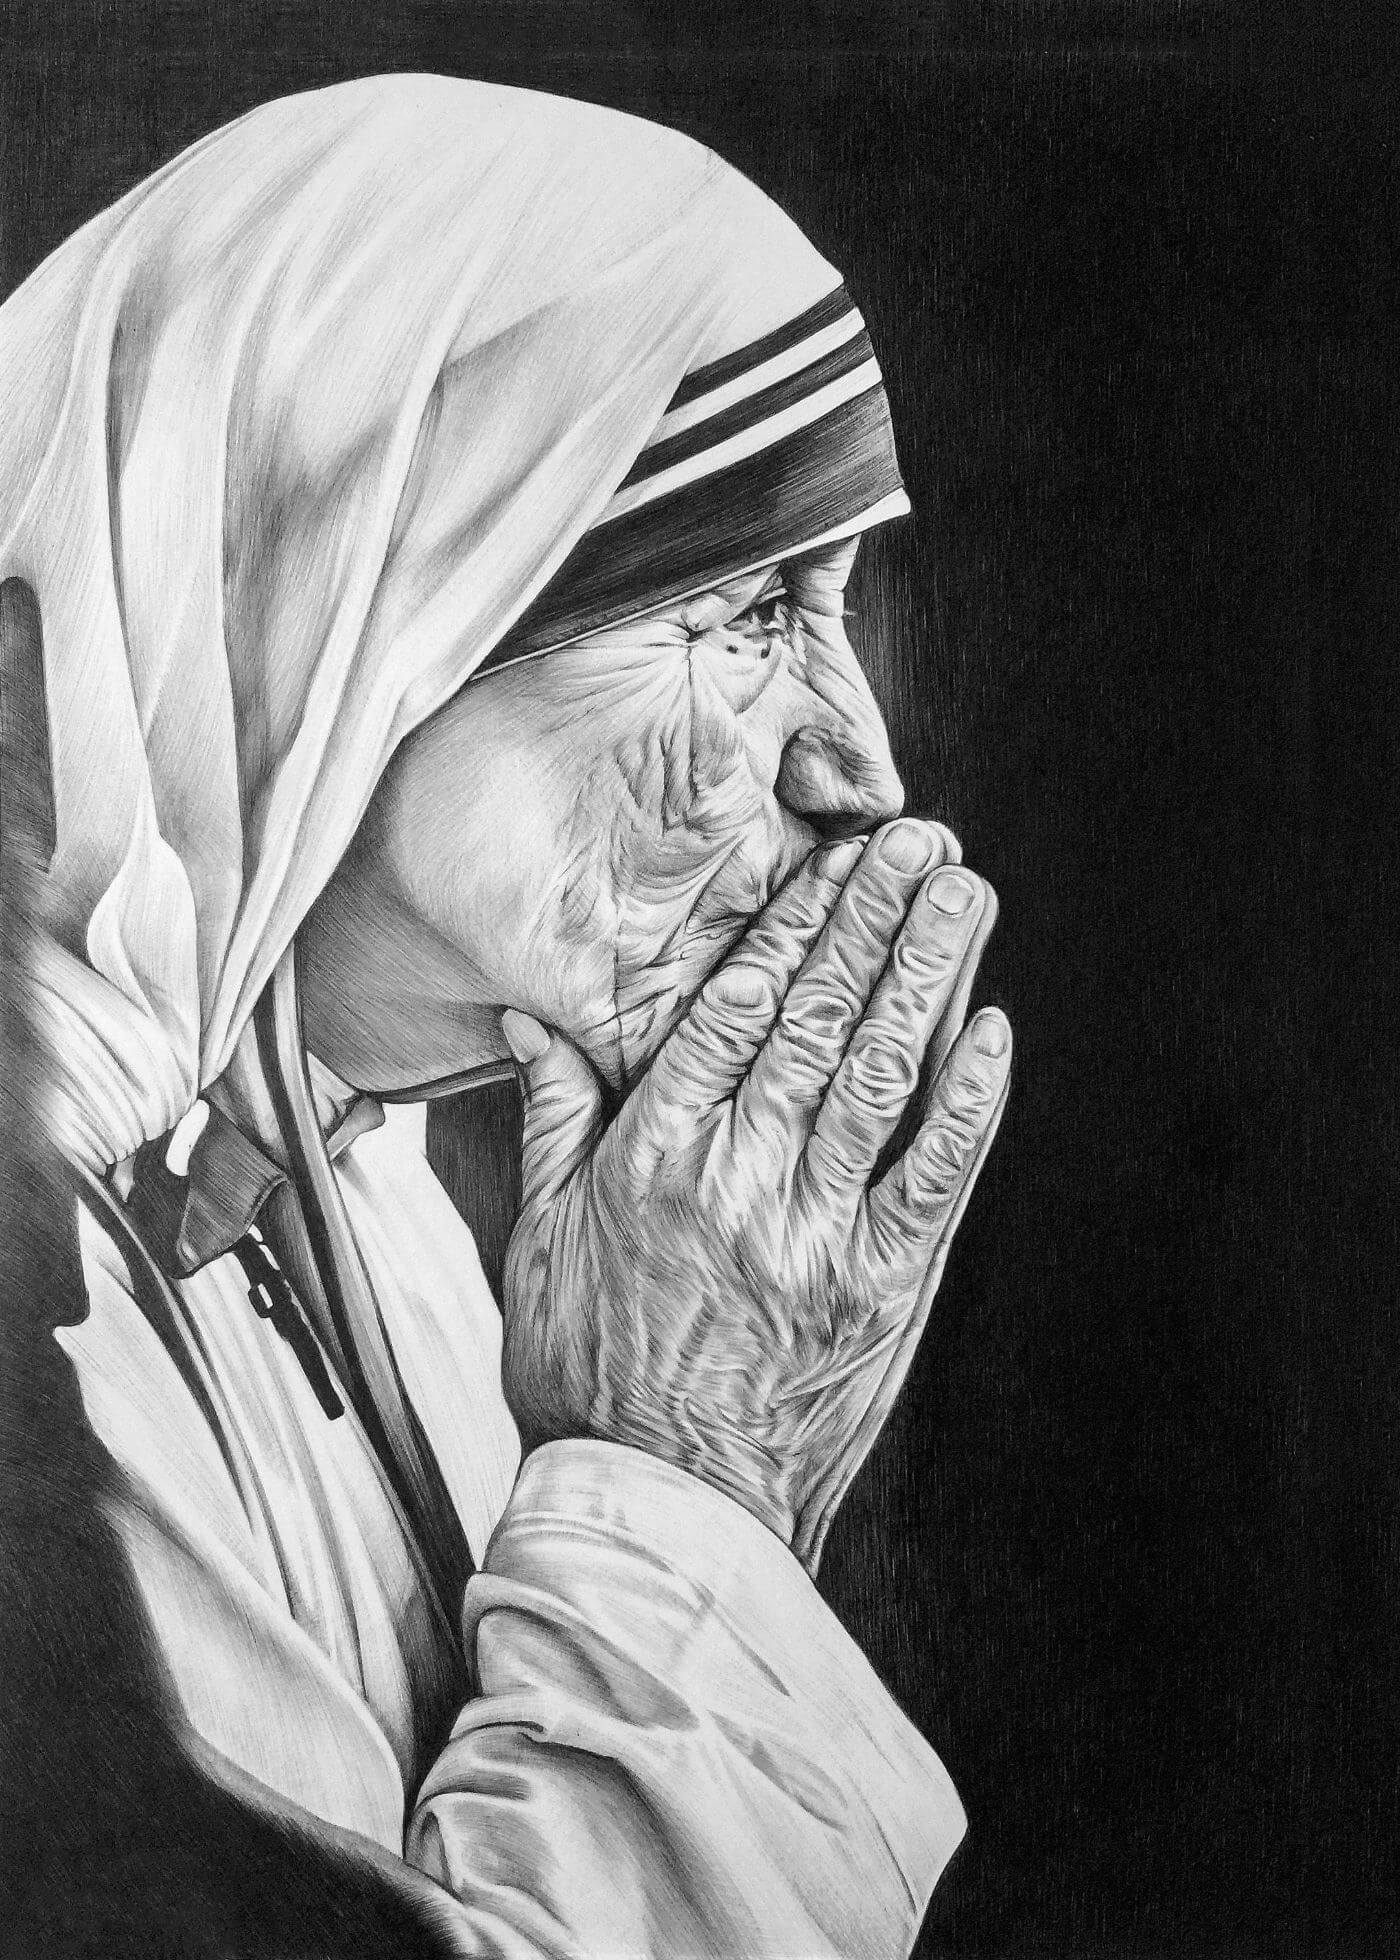 Mother teresa sketch with color pencil. - Prafulraulwarart | Facebook